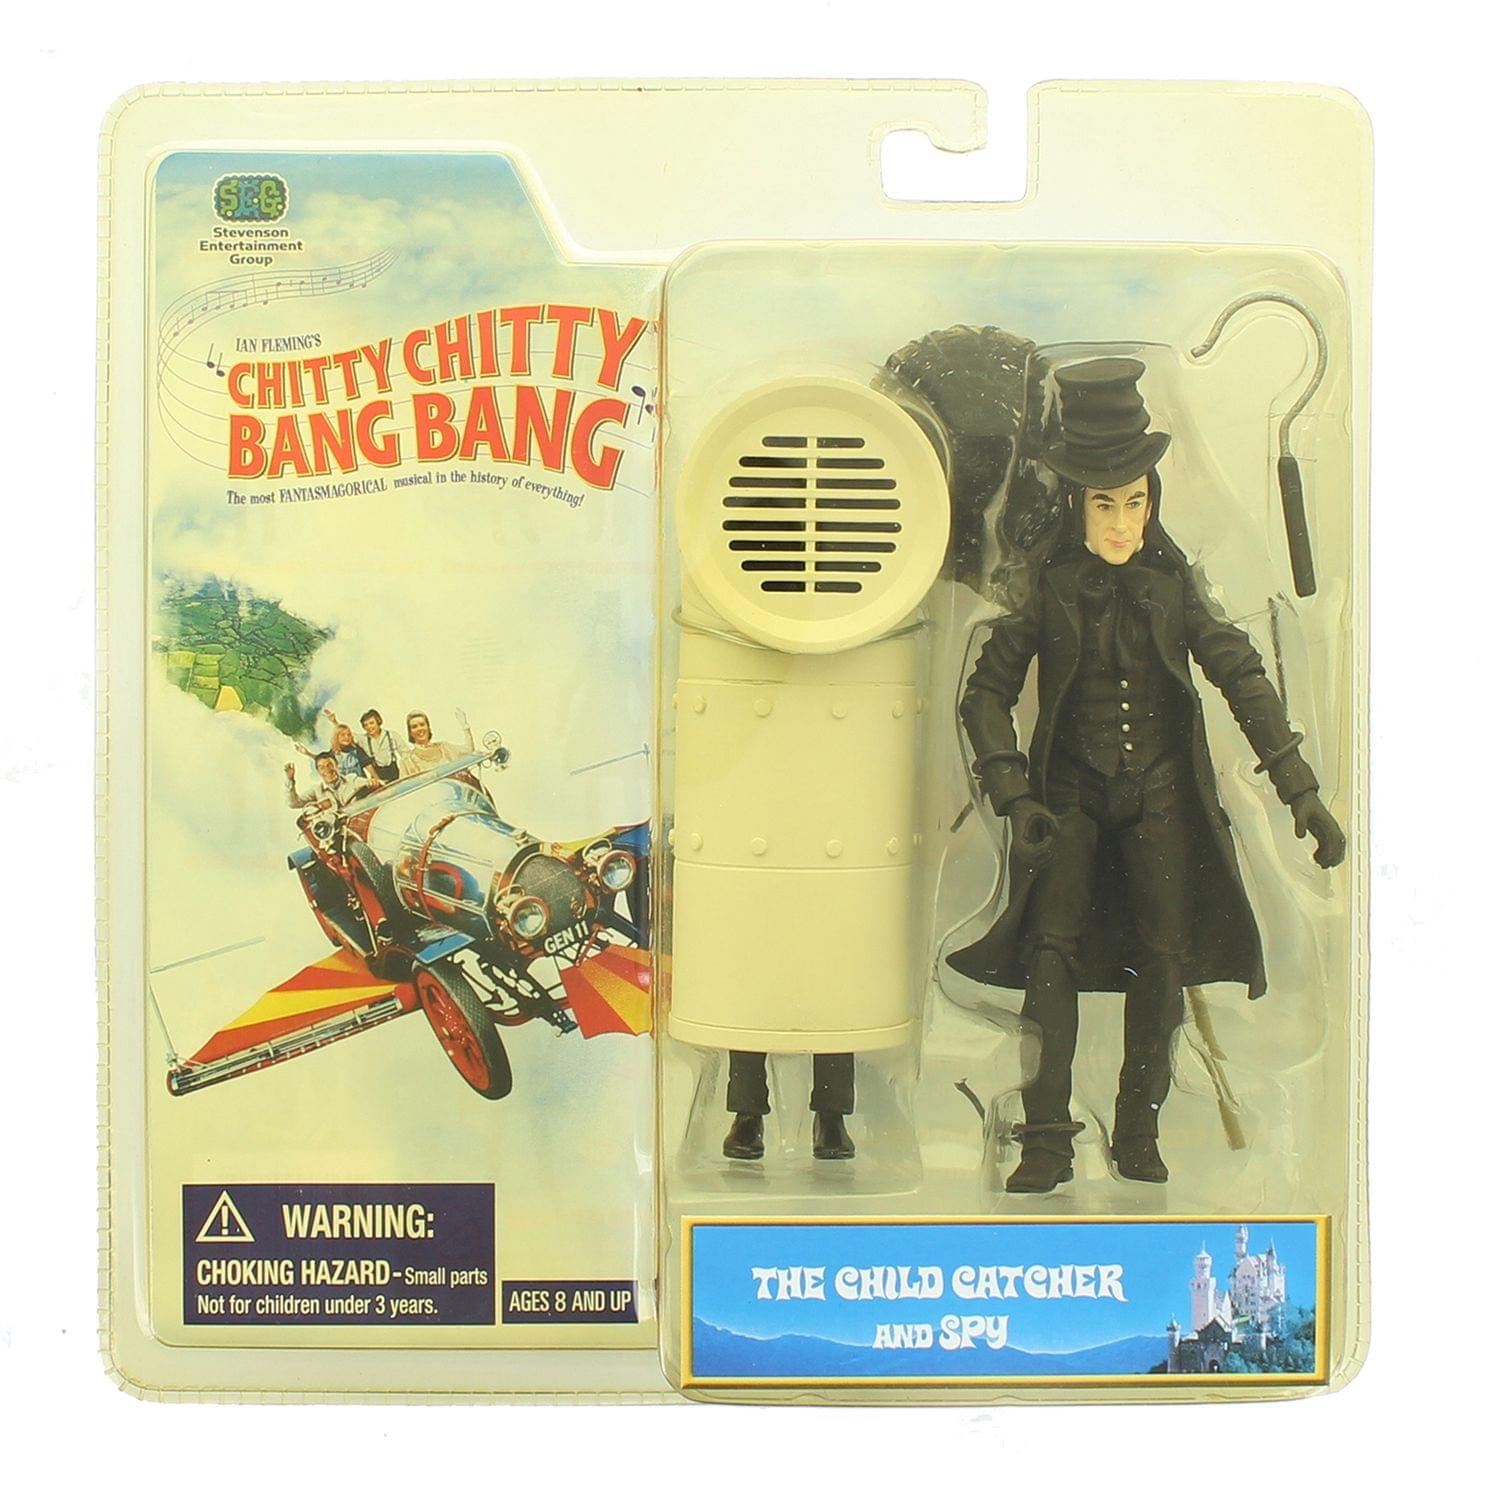 Chitty Chitty Bang Bang Two Pack Figure Child Catcher & Spy